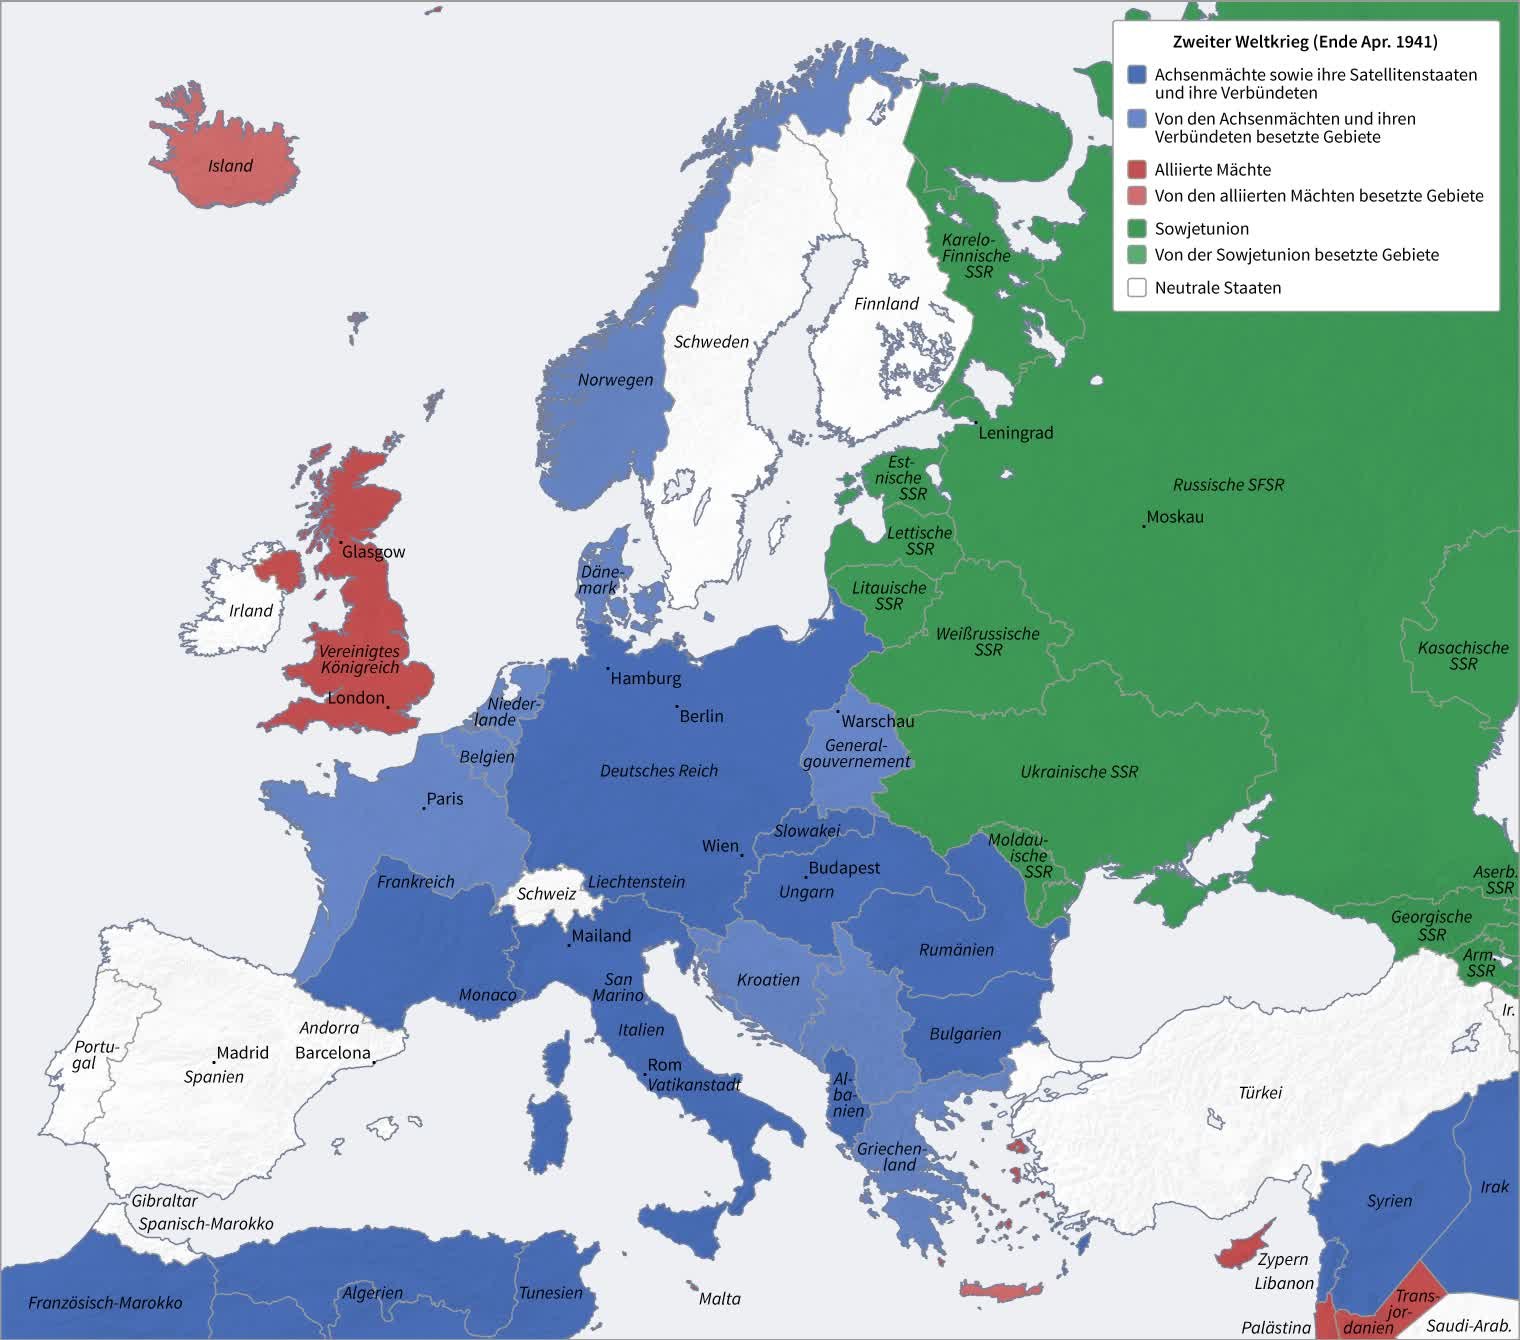 File:Second World War Europe 1939-1942 de.webm - Wikimedia Commons